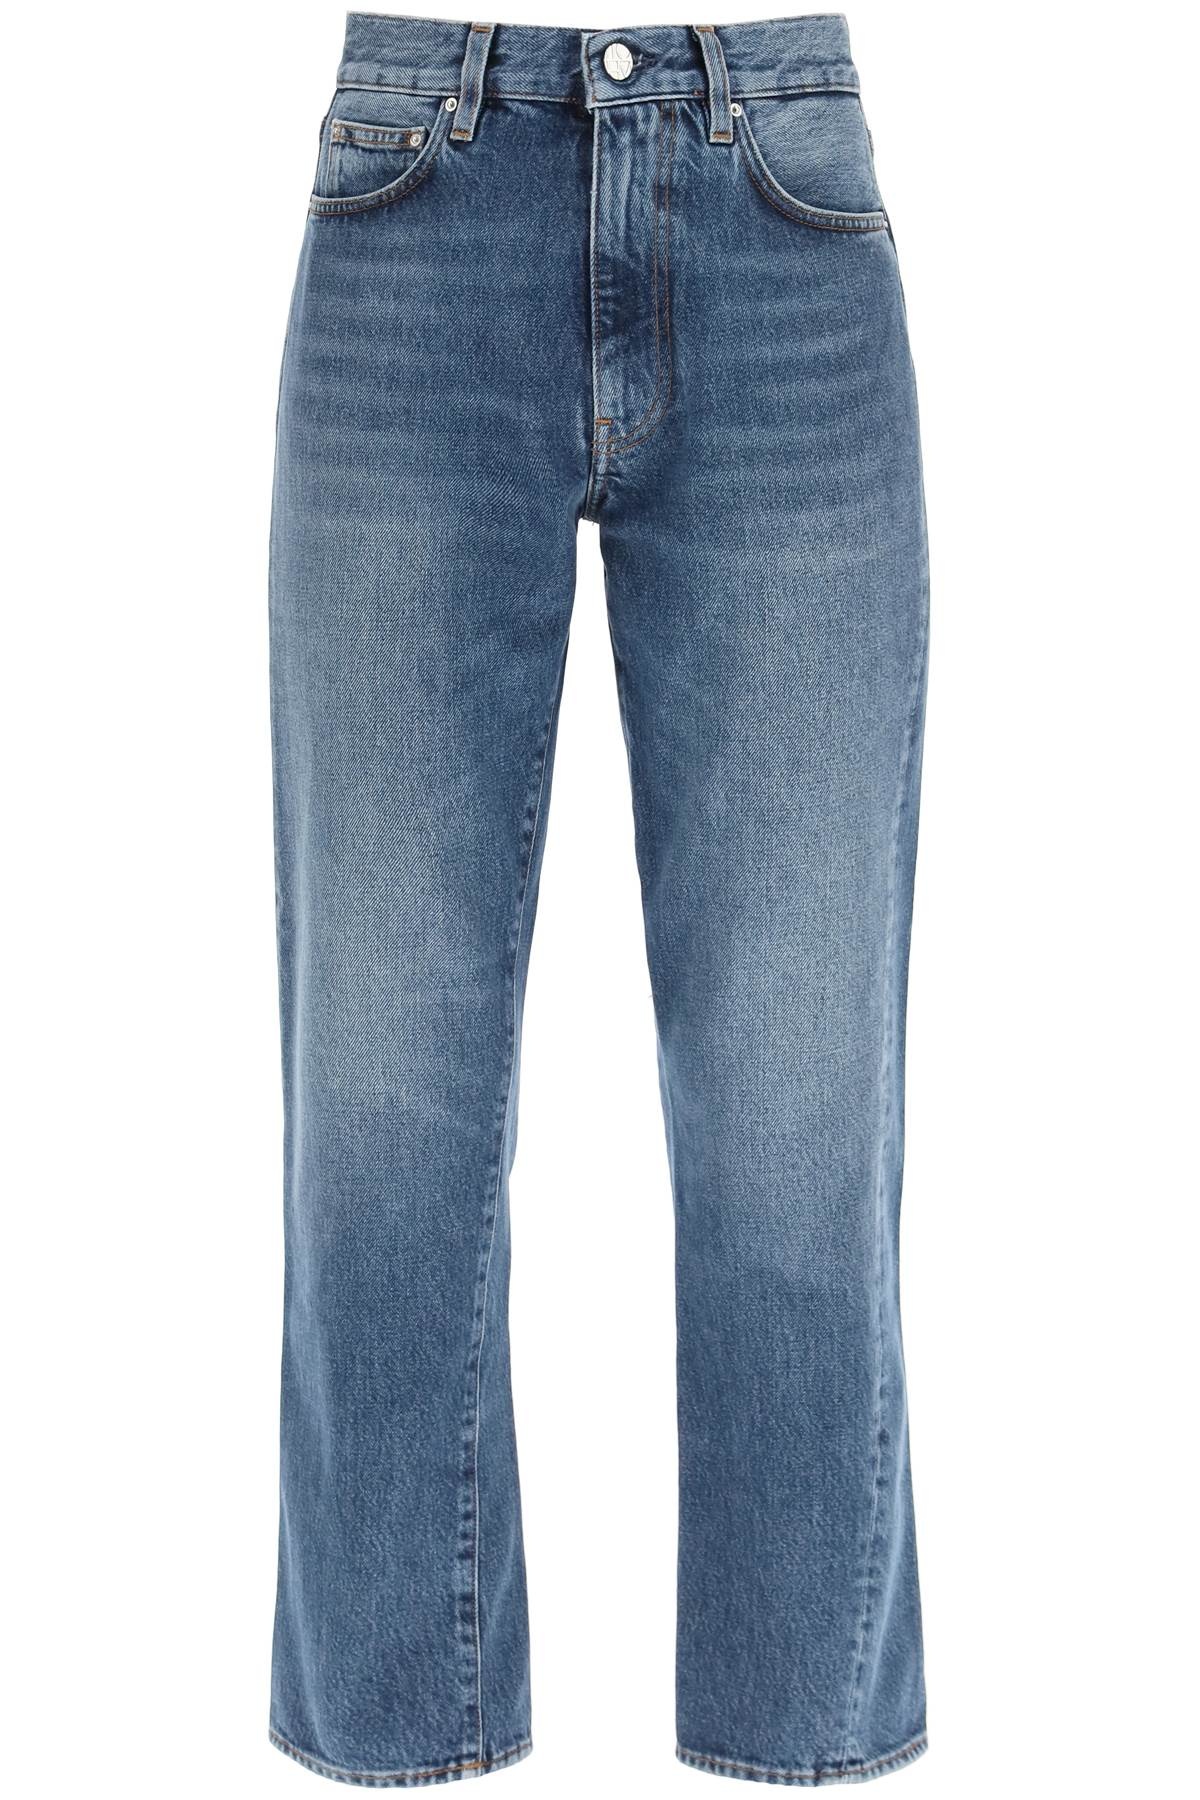 Toteme Twisted Seam Slim Jeans Women - 1